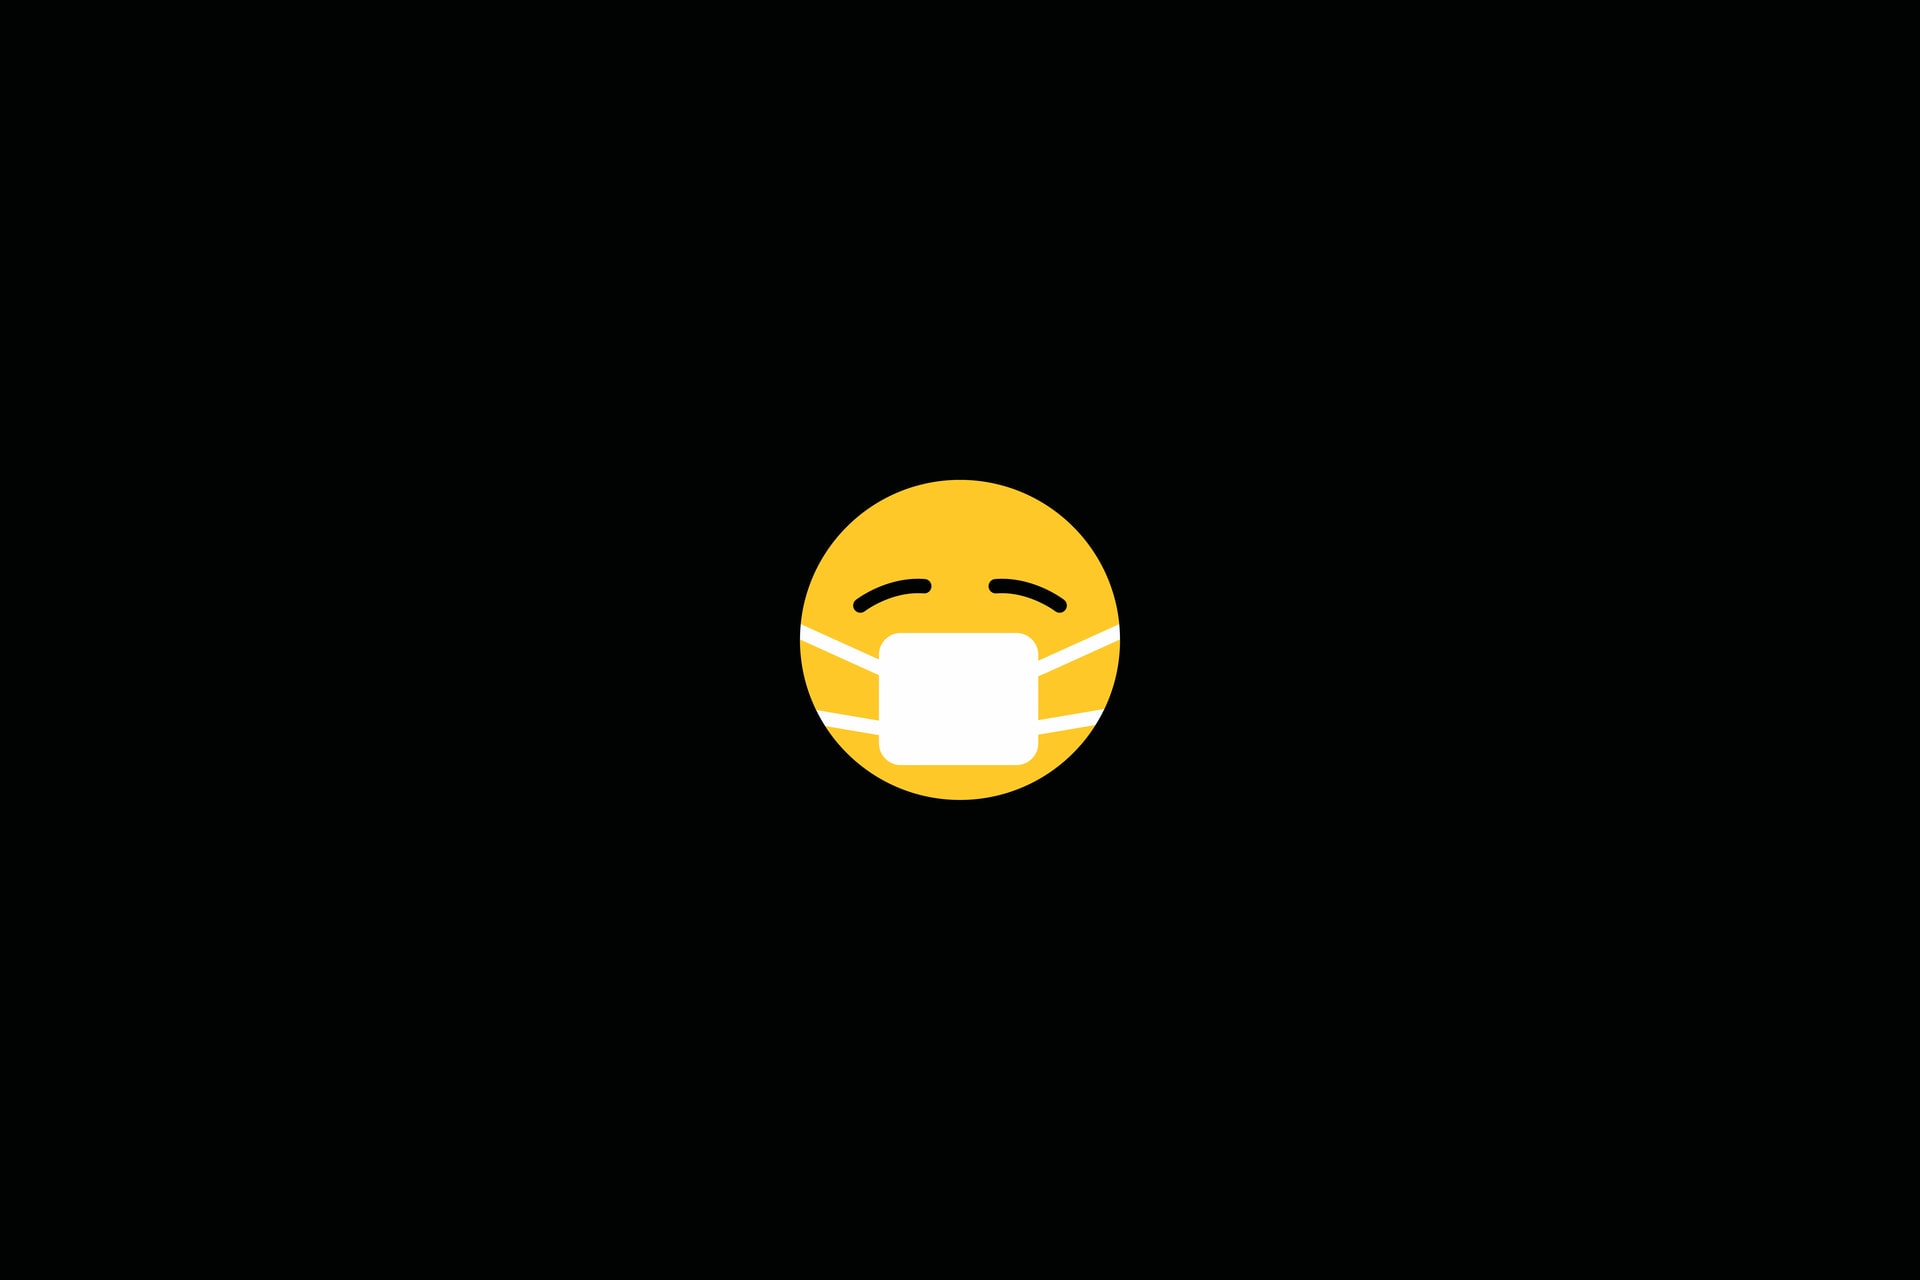 An emoji wearing a mask